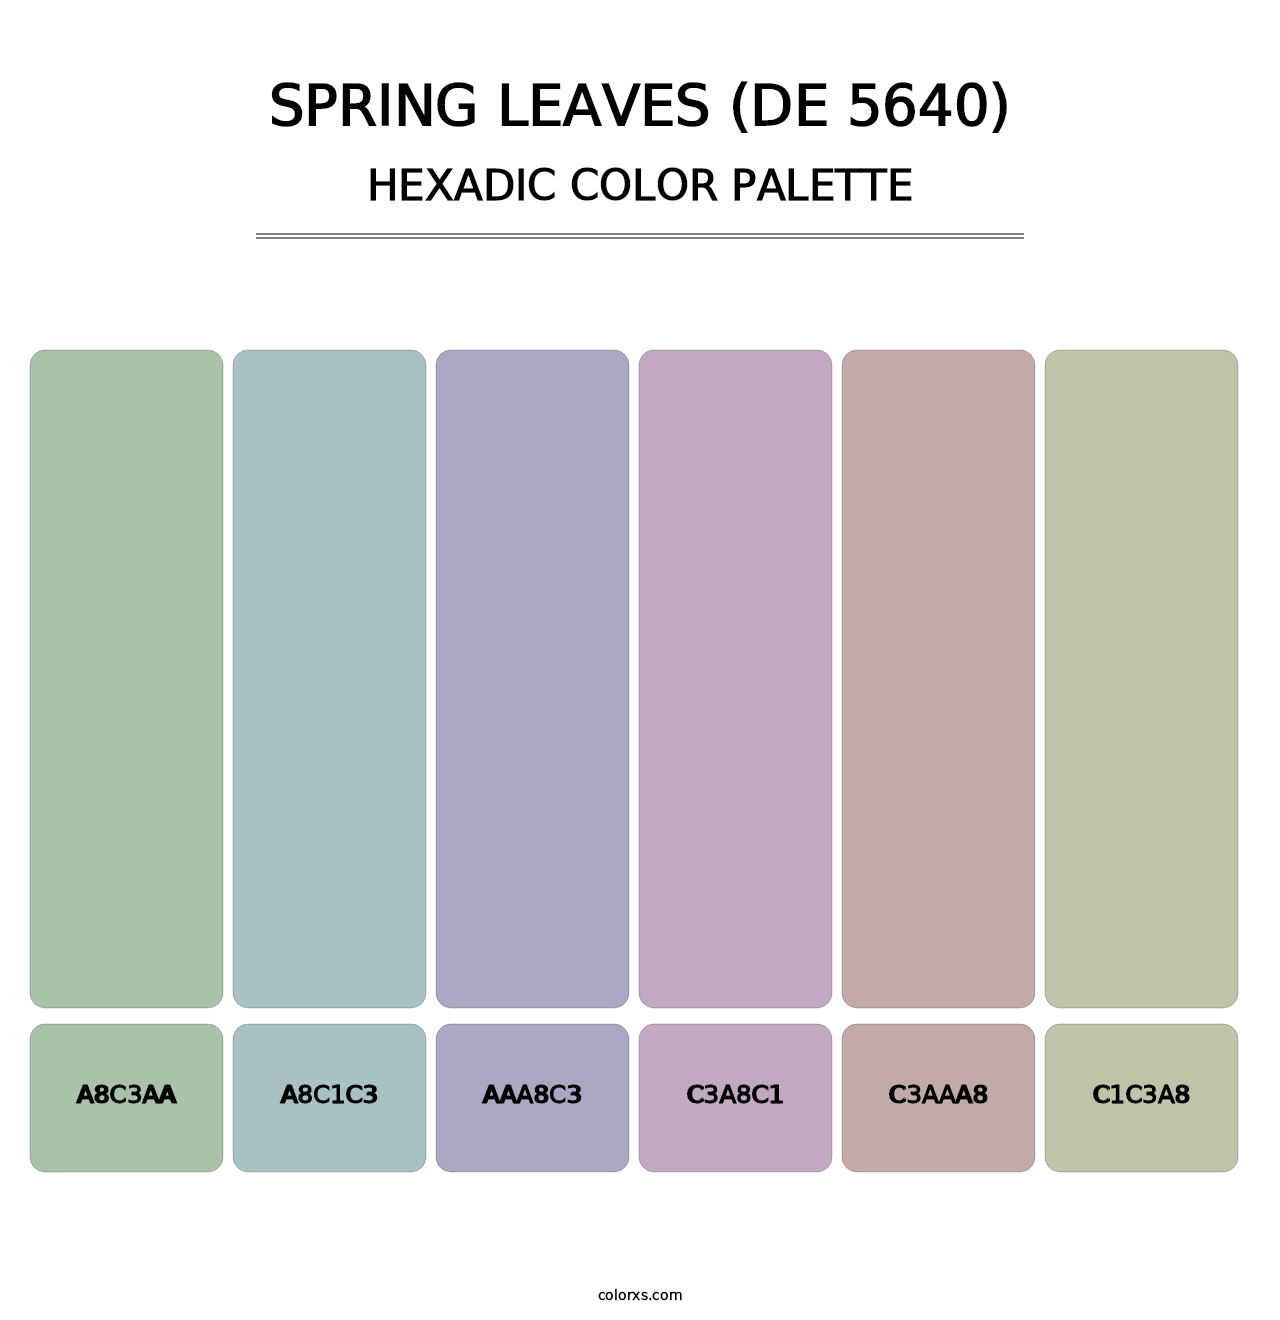 Spring Leaves (DE 5640) - Hexadic Color Palette